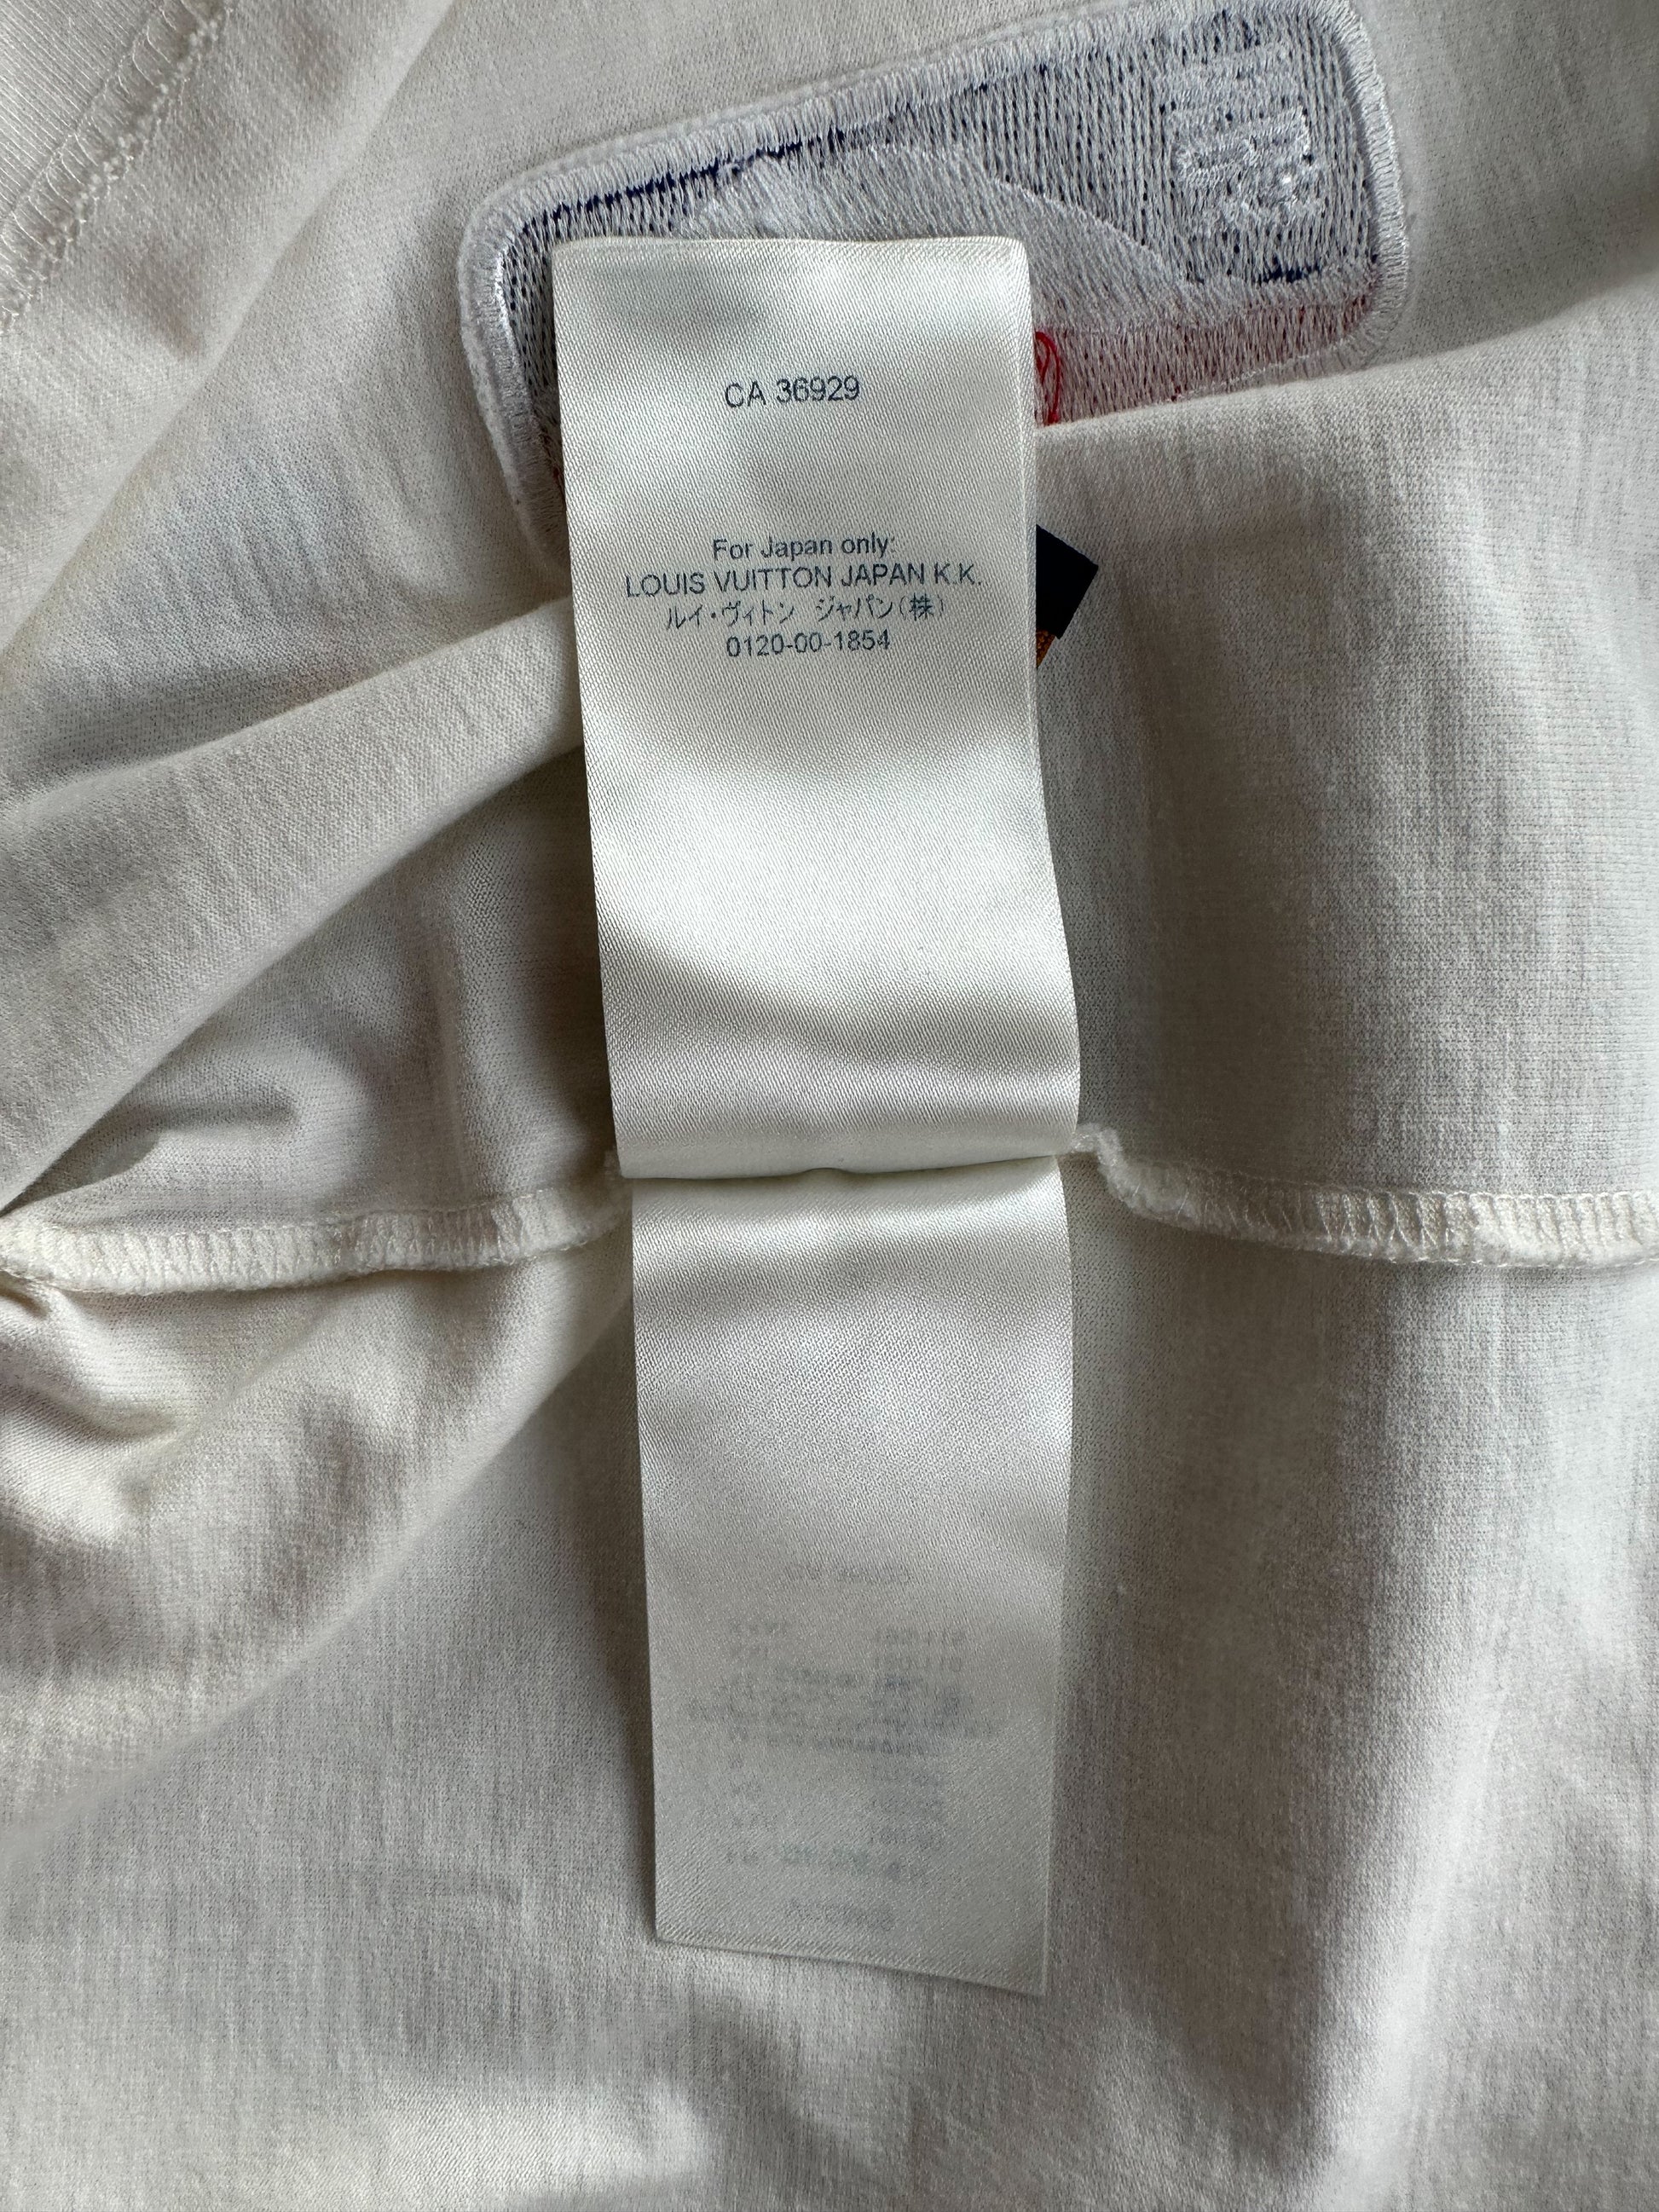 Louis Vuitton, Shirts, Louis Vuitton Ca 36929